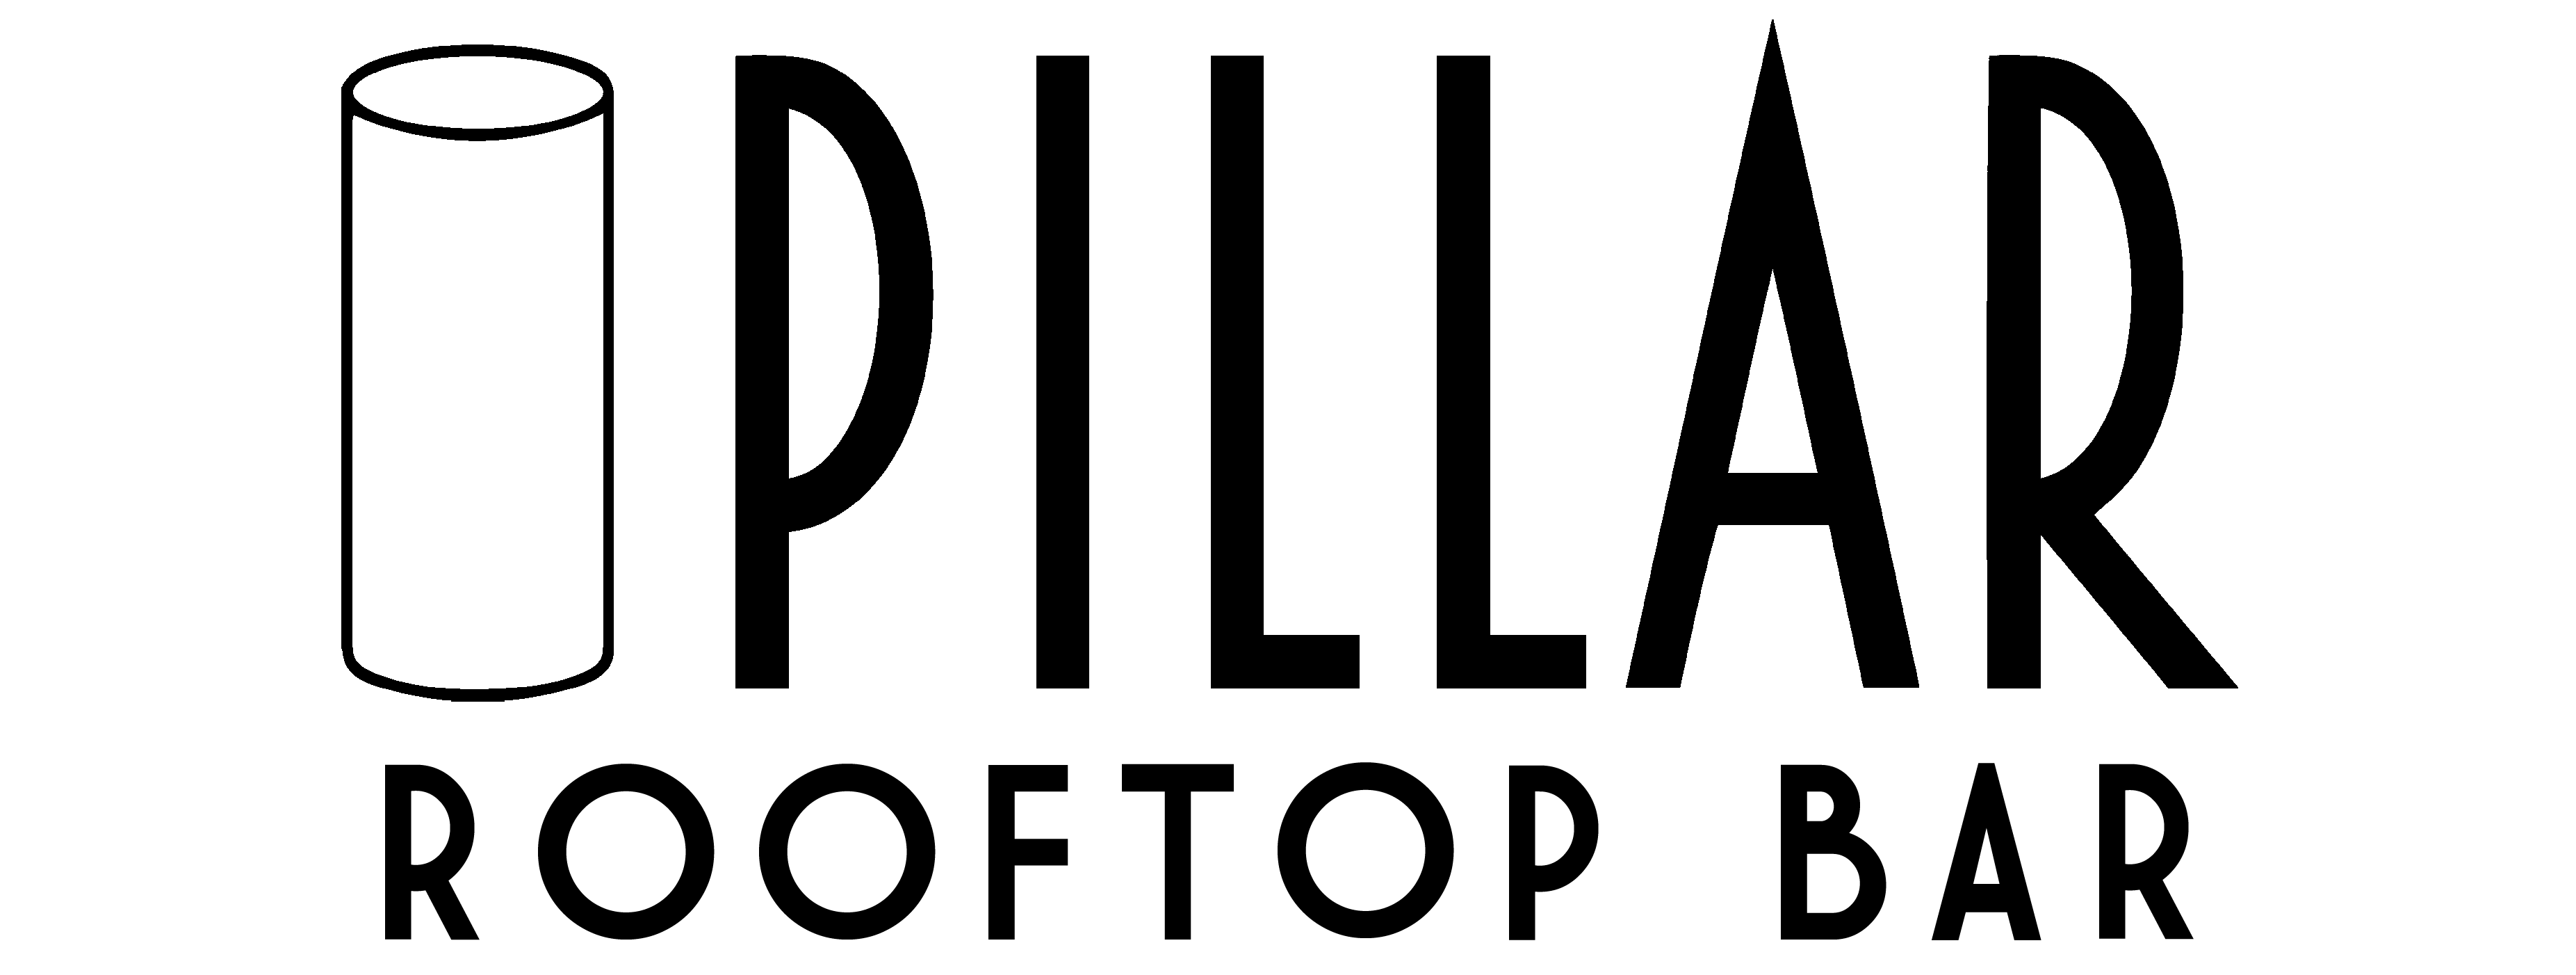 PILLAR Logo